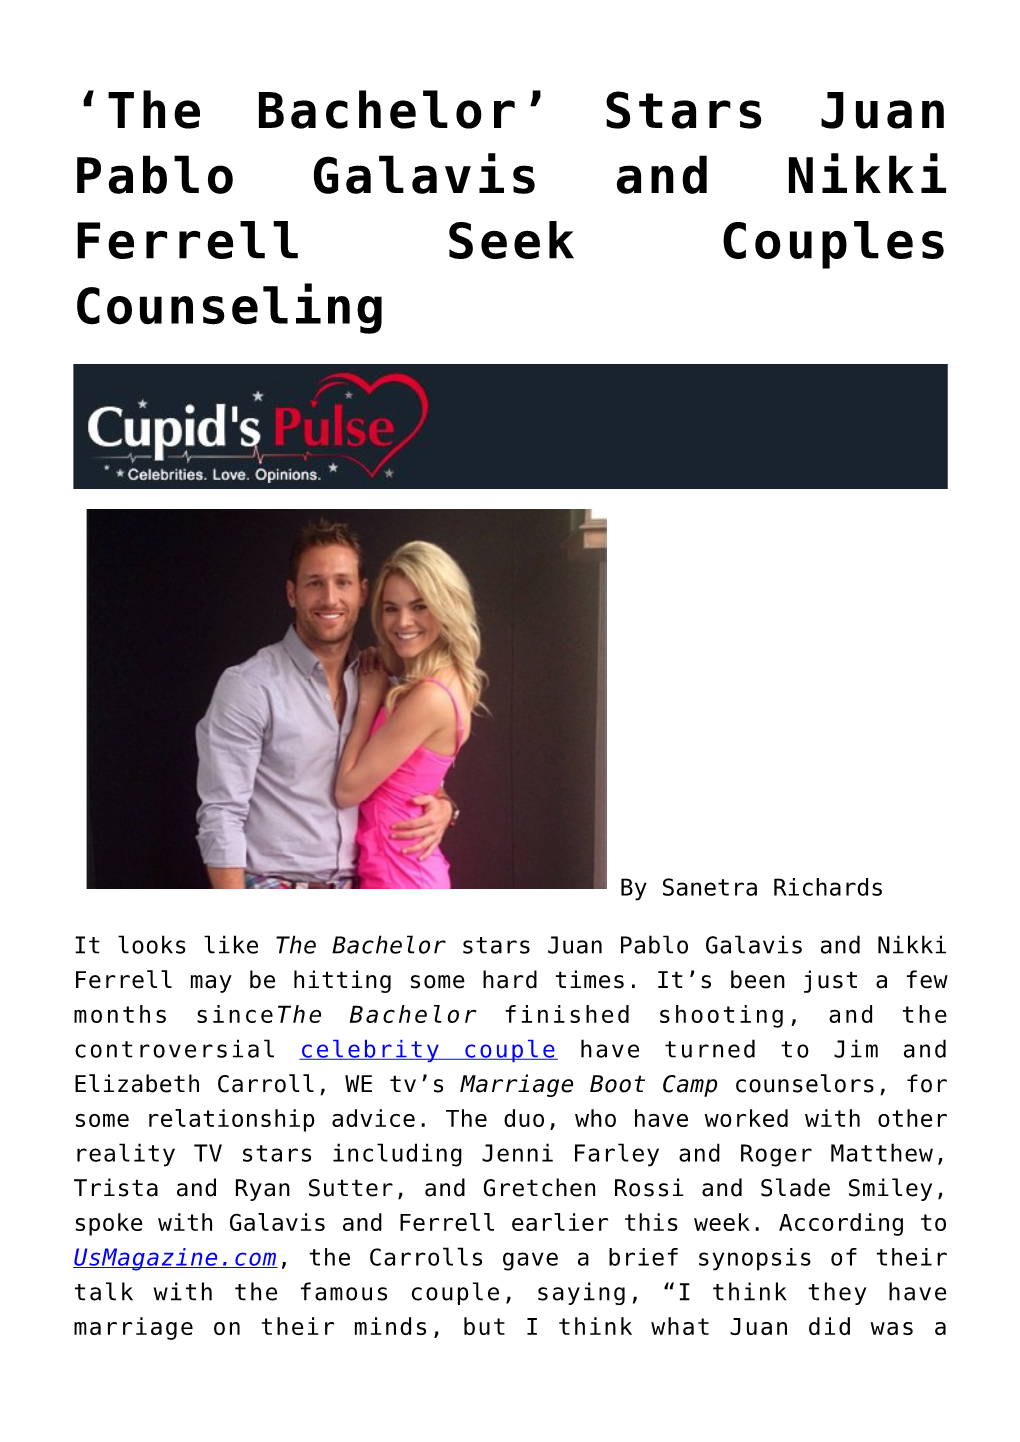 Stars Juan Pablo Galavis and Nikki Ferrell Seek Couples Counseling